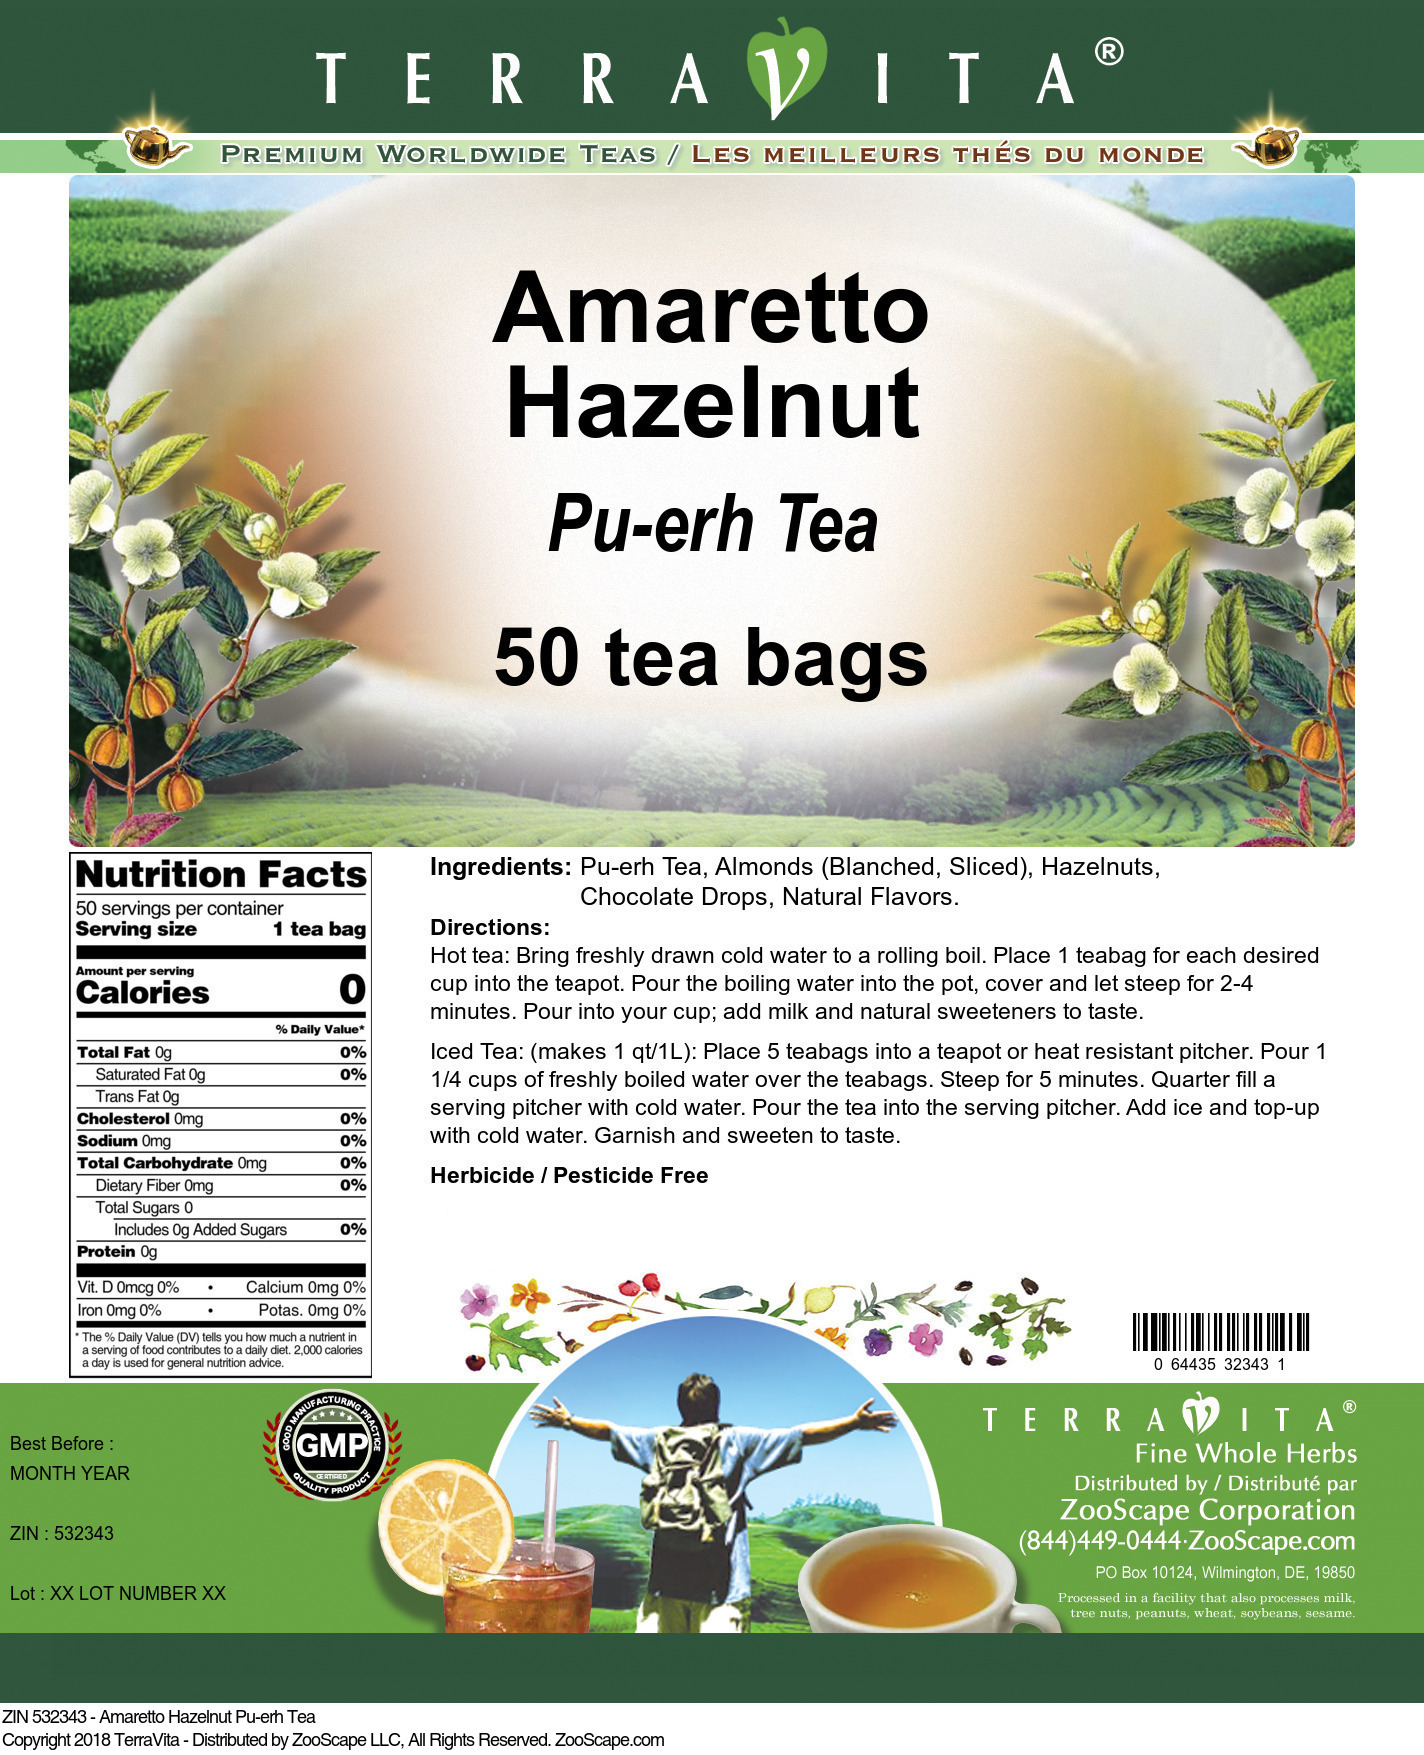 Amaretto Hazelnut Pu-erh Tea - Label